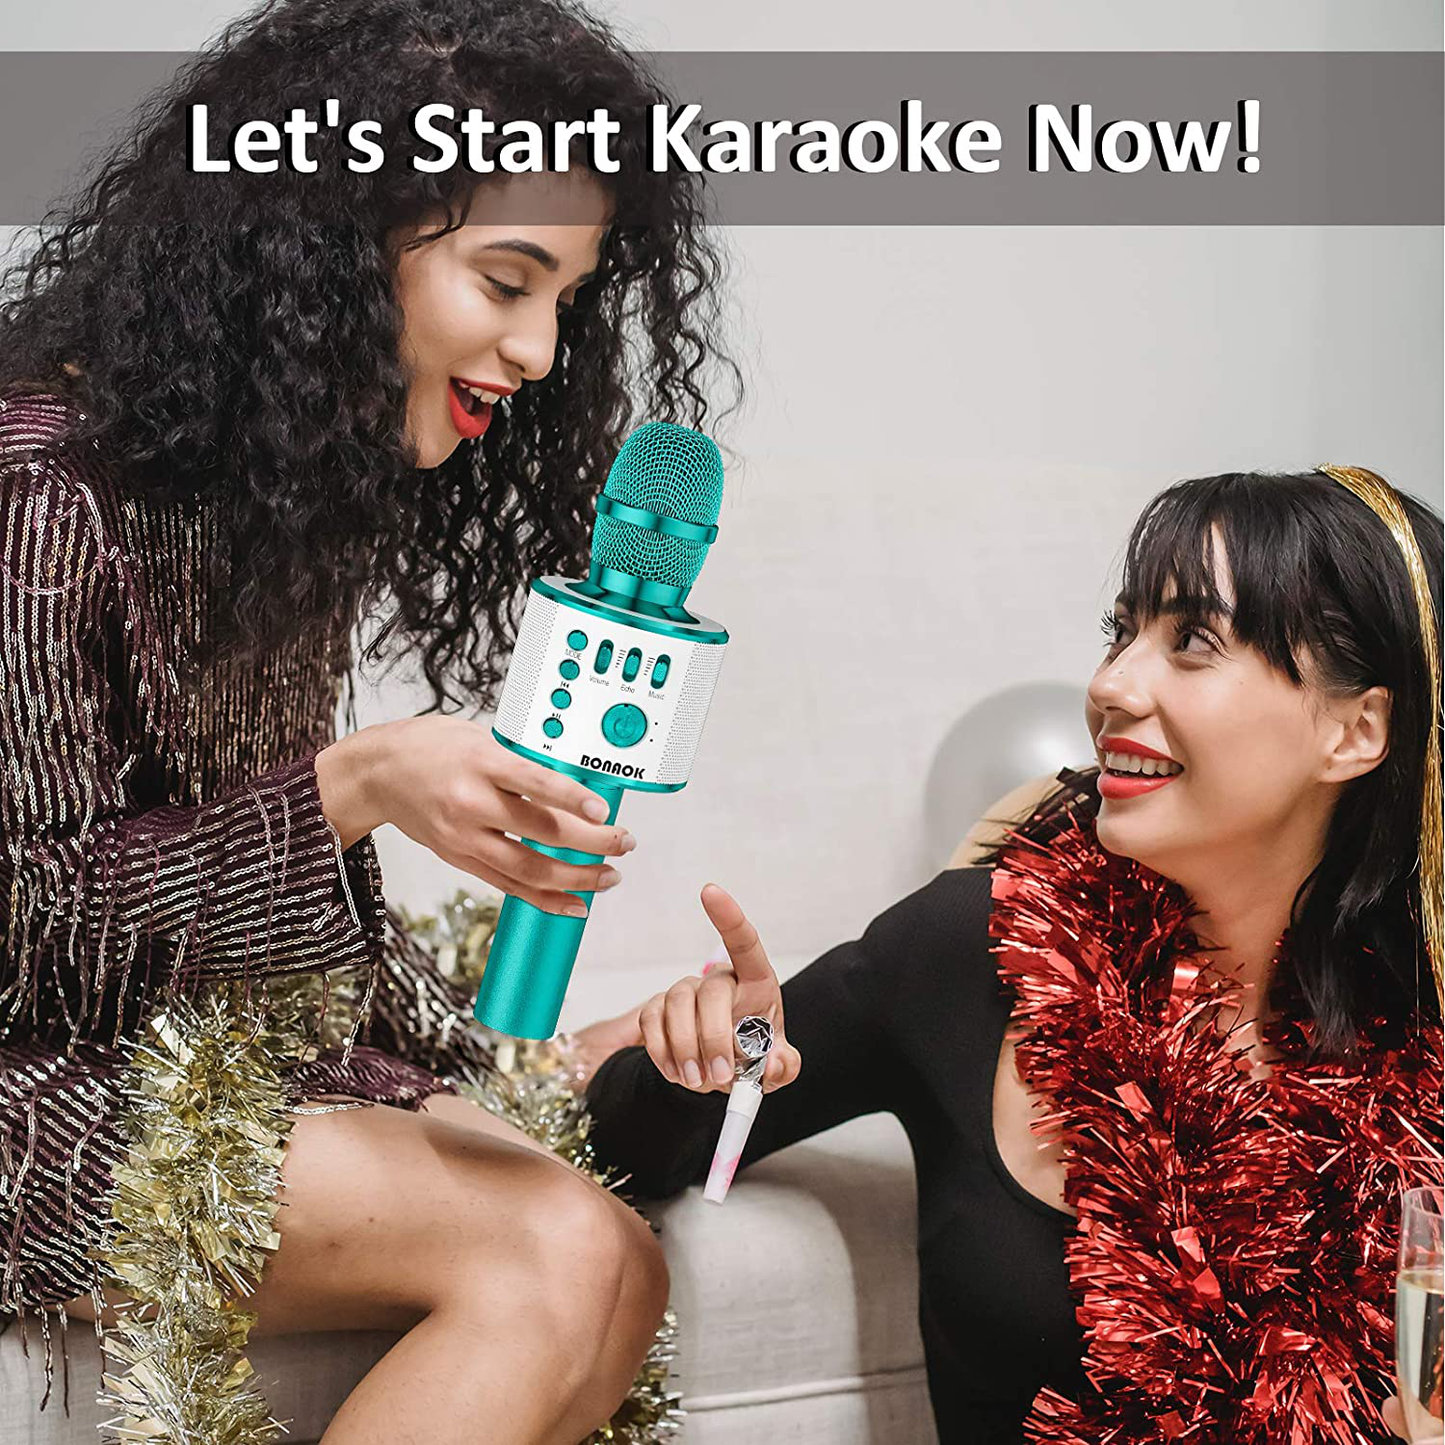 BONAOK Karaoke Microphone Bluetooth Wireless, Portable Karaoke Machine Mic Speaker for Kids and Adults Home Party Birthday(Black Gold)